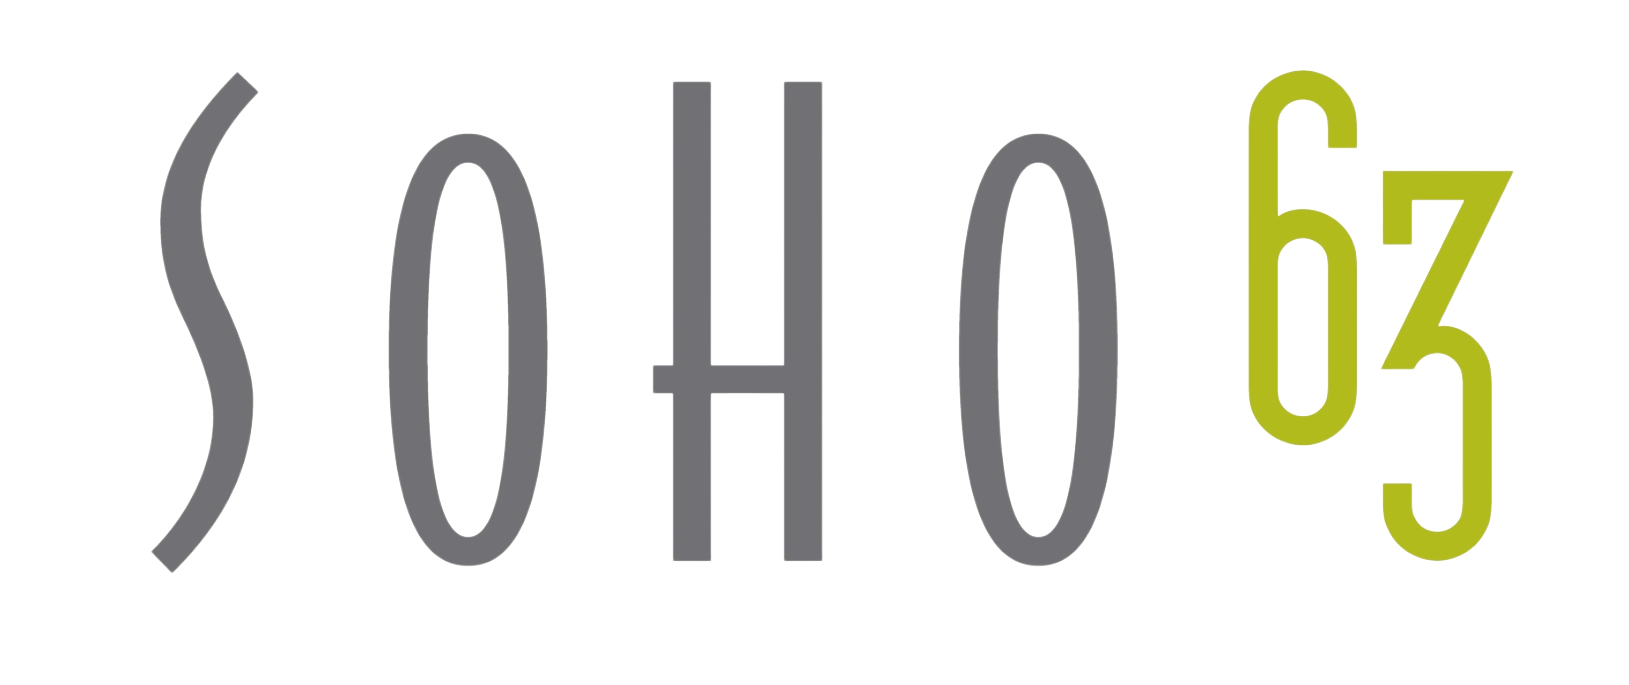 SoHo63-Logo-Photoroom.png